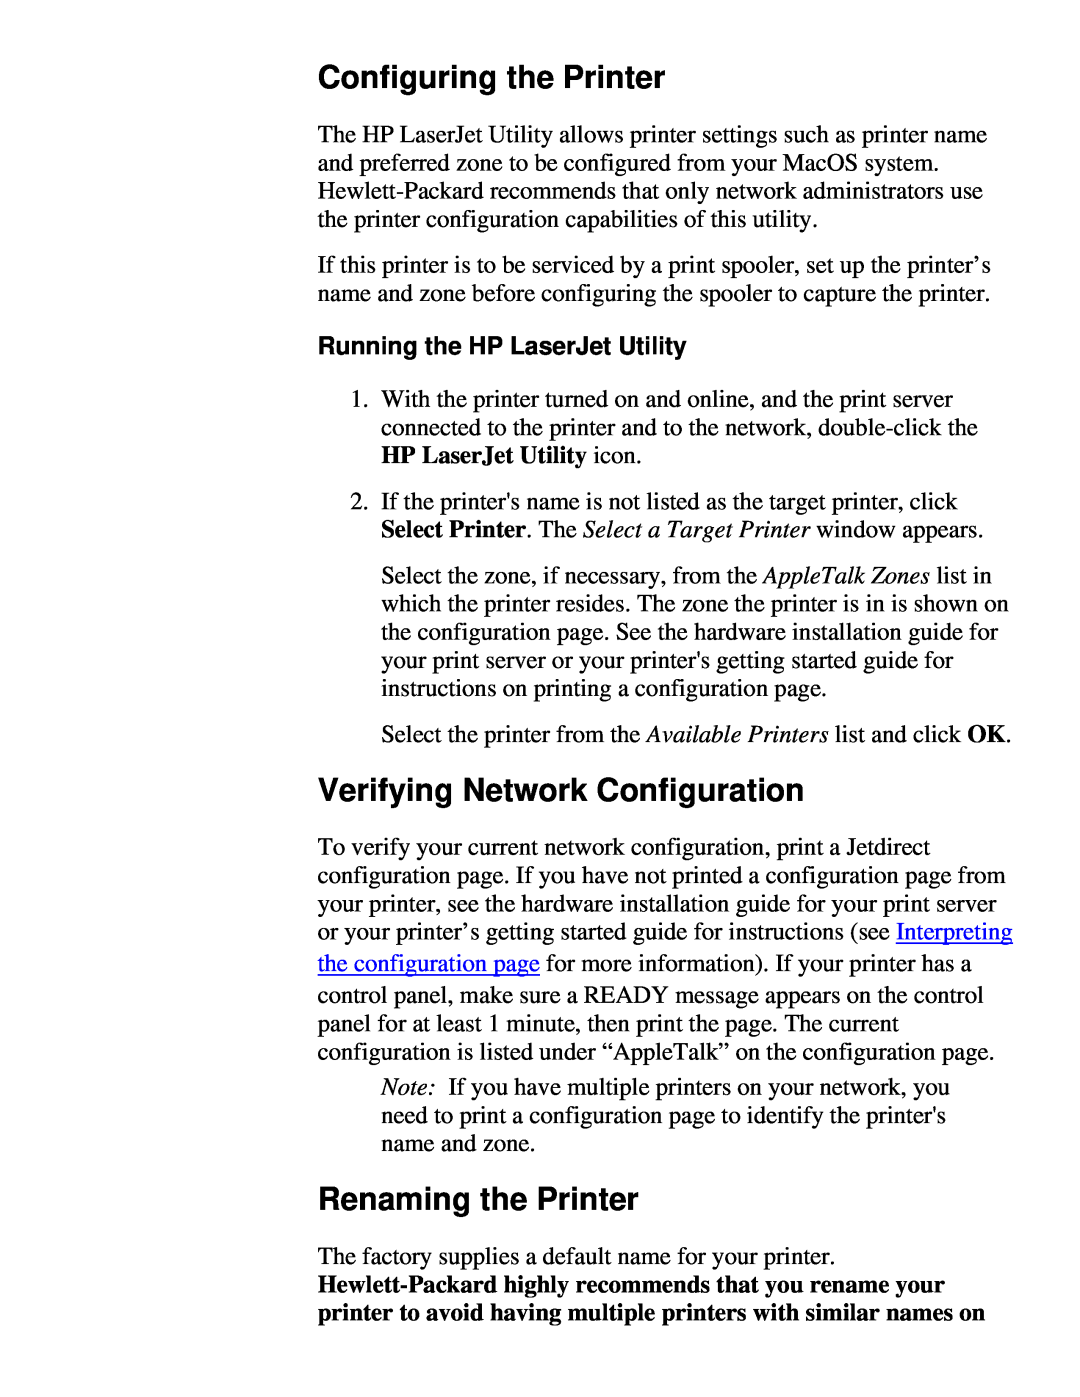 HP 310X Configuring the Printer, Verifying Network Configuration, Renaming the Printer, Running the HP LaserJet Utility 